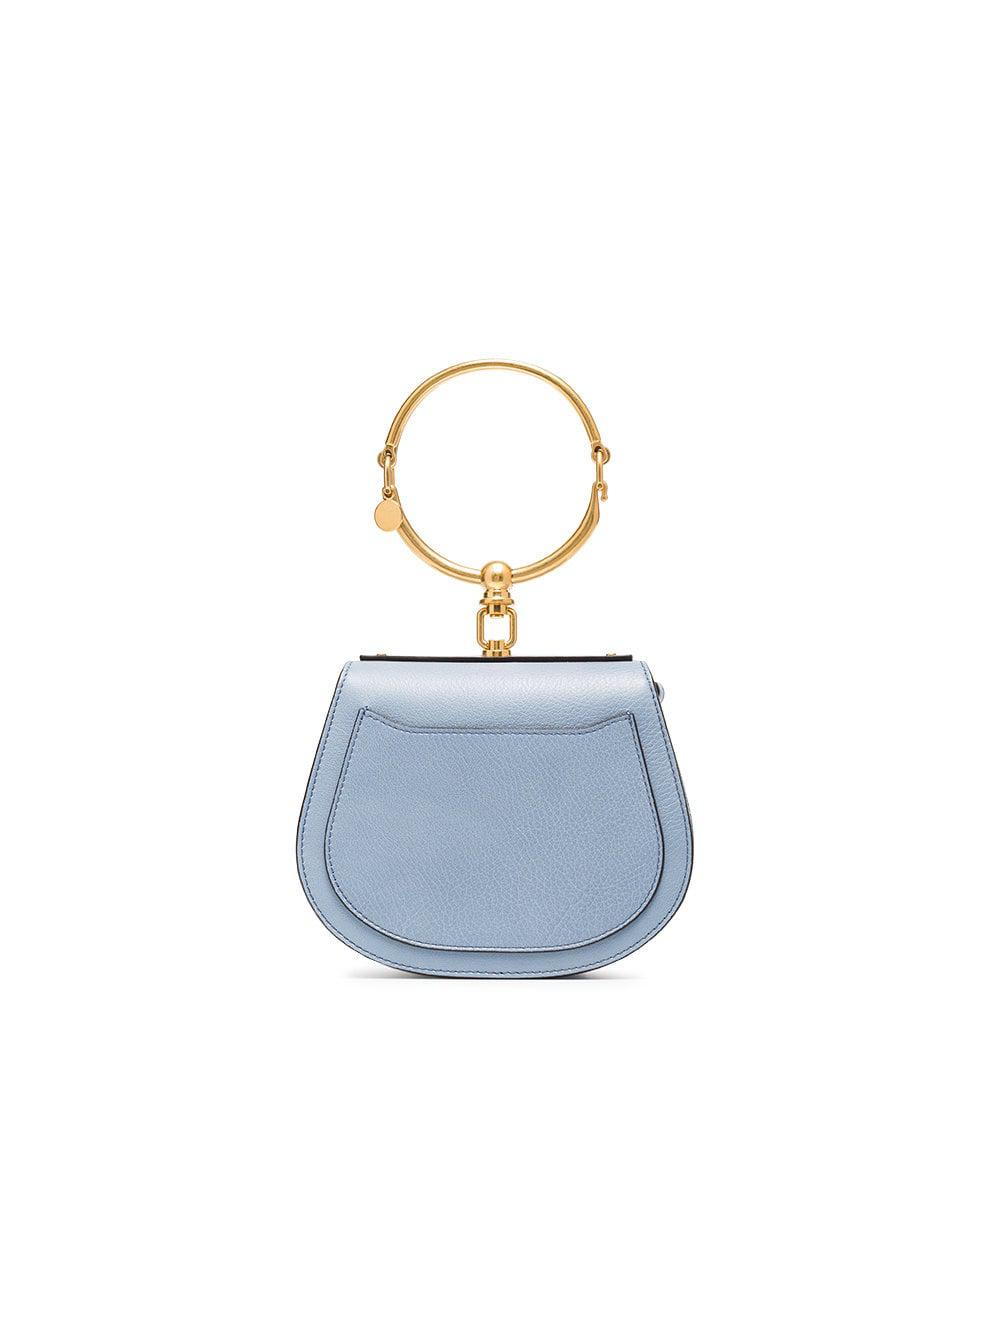 Chloé Nile Small Leather Bracelet Bag in Blue | Lyst